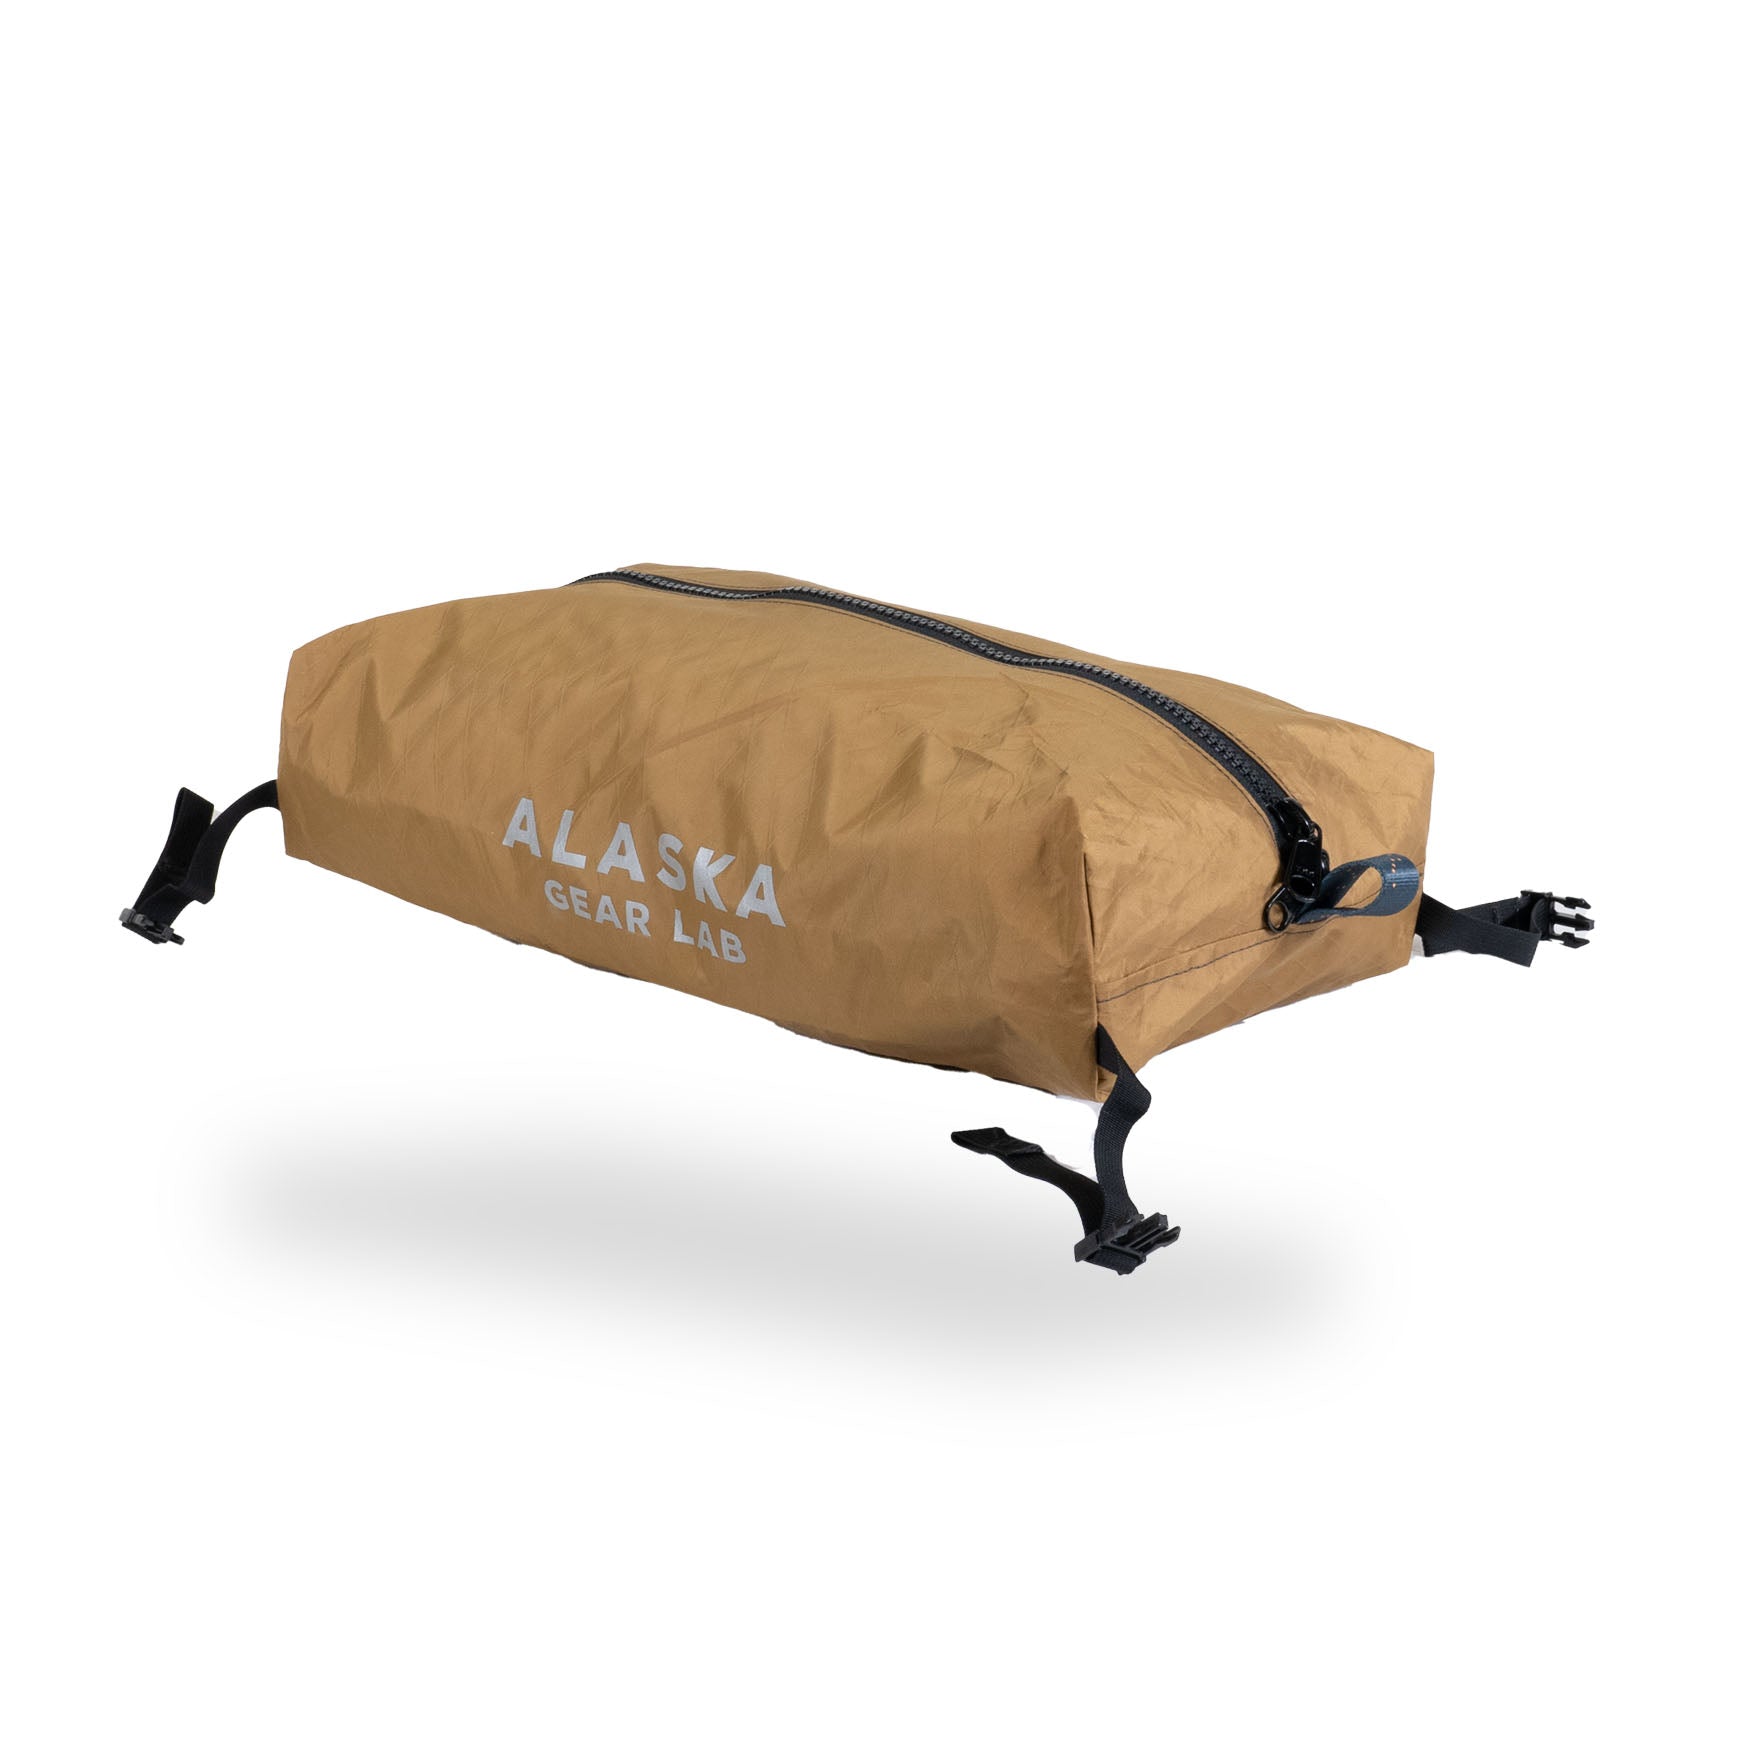 Alaska Gear Company Pulk Bag Accessory Pod - T26183